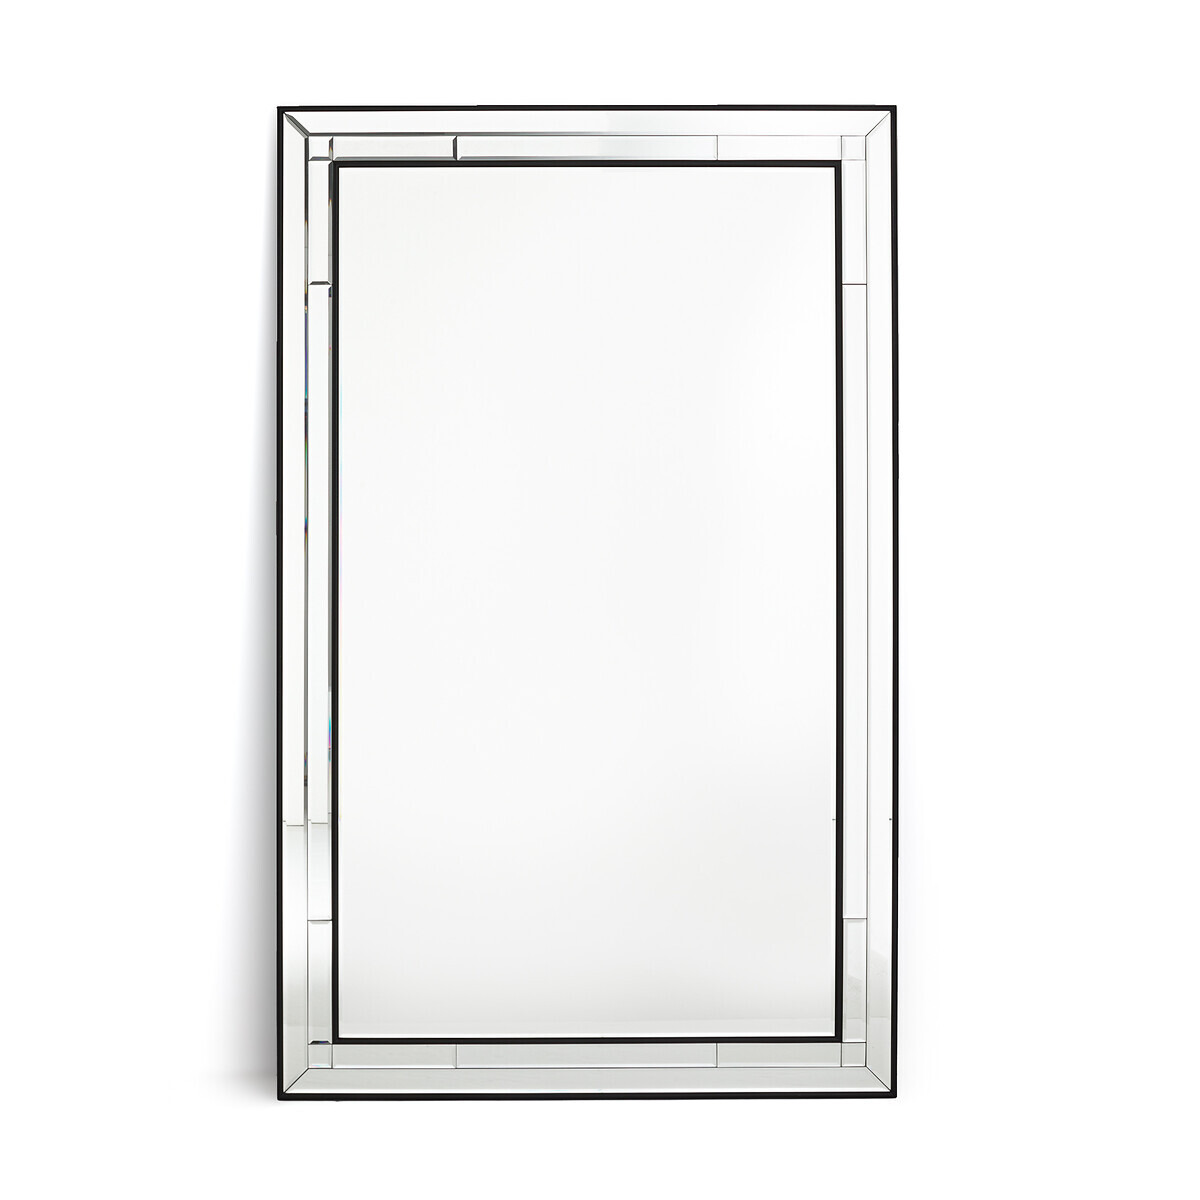 Andella 100 x 160cm Bevelled Finish Rectangular Mirror - image 1